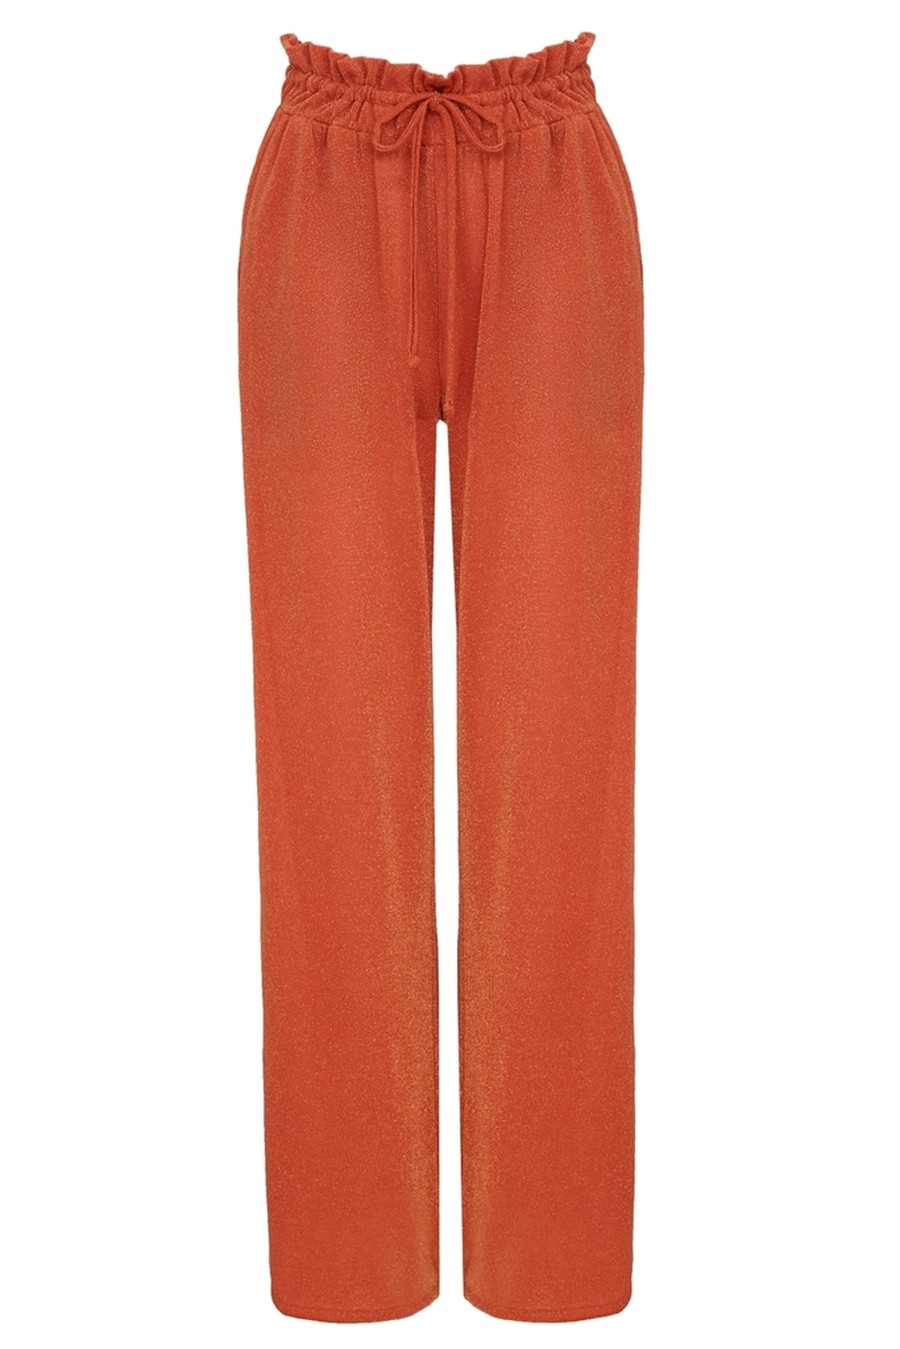 calça pantalona lurex orange SB44 ripple bb